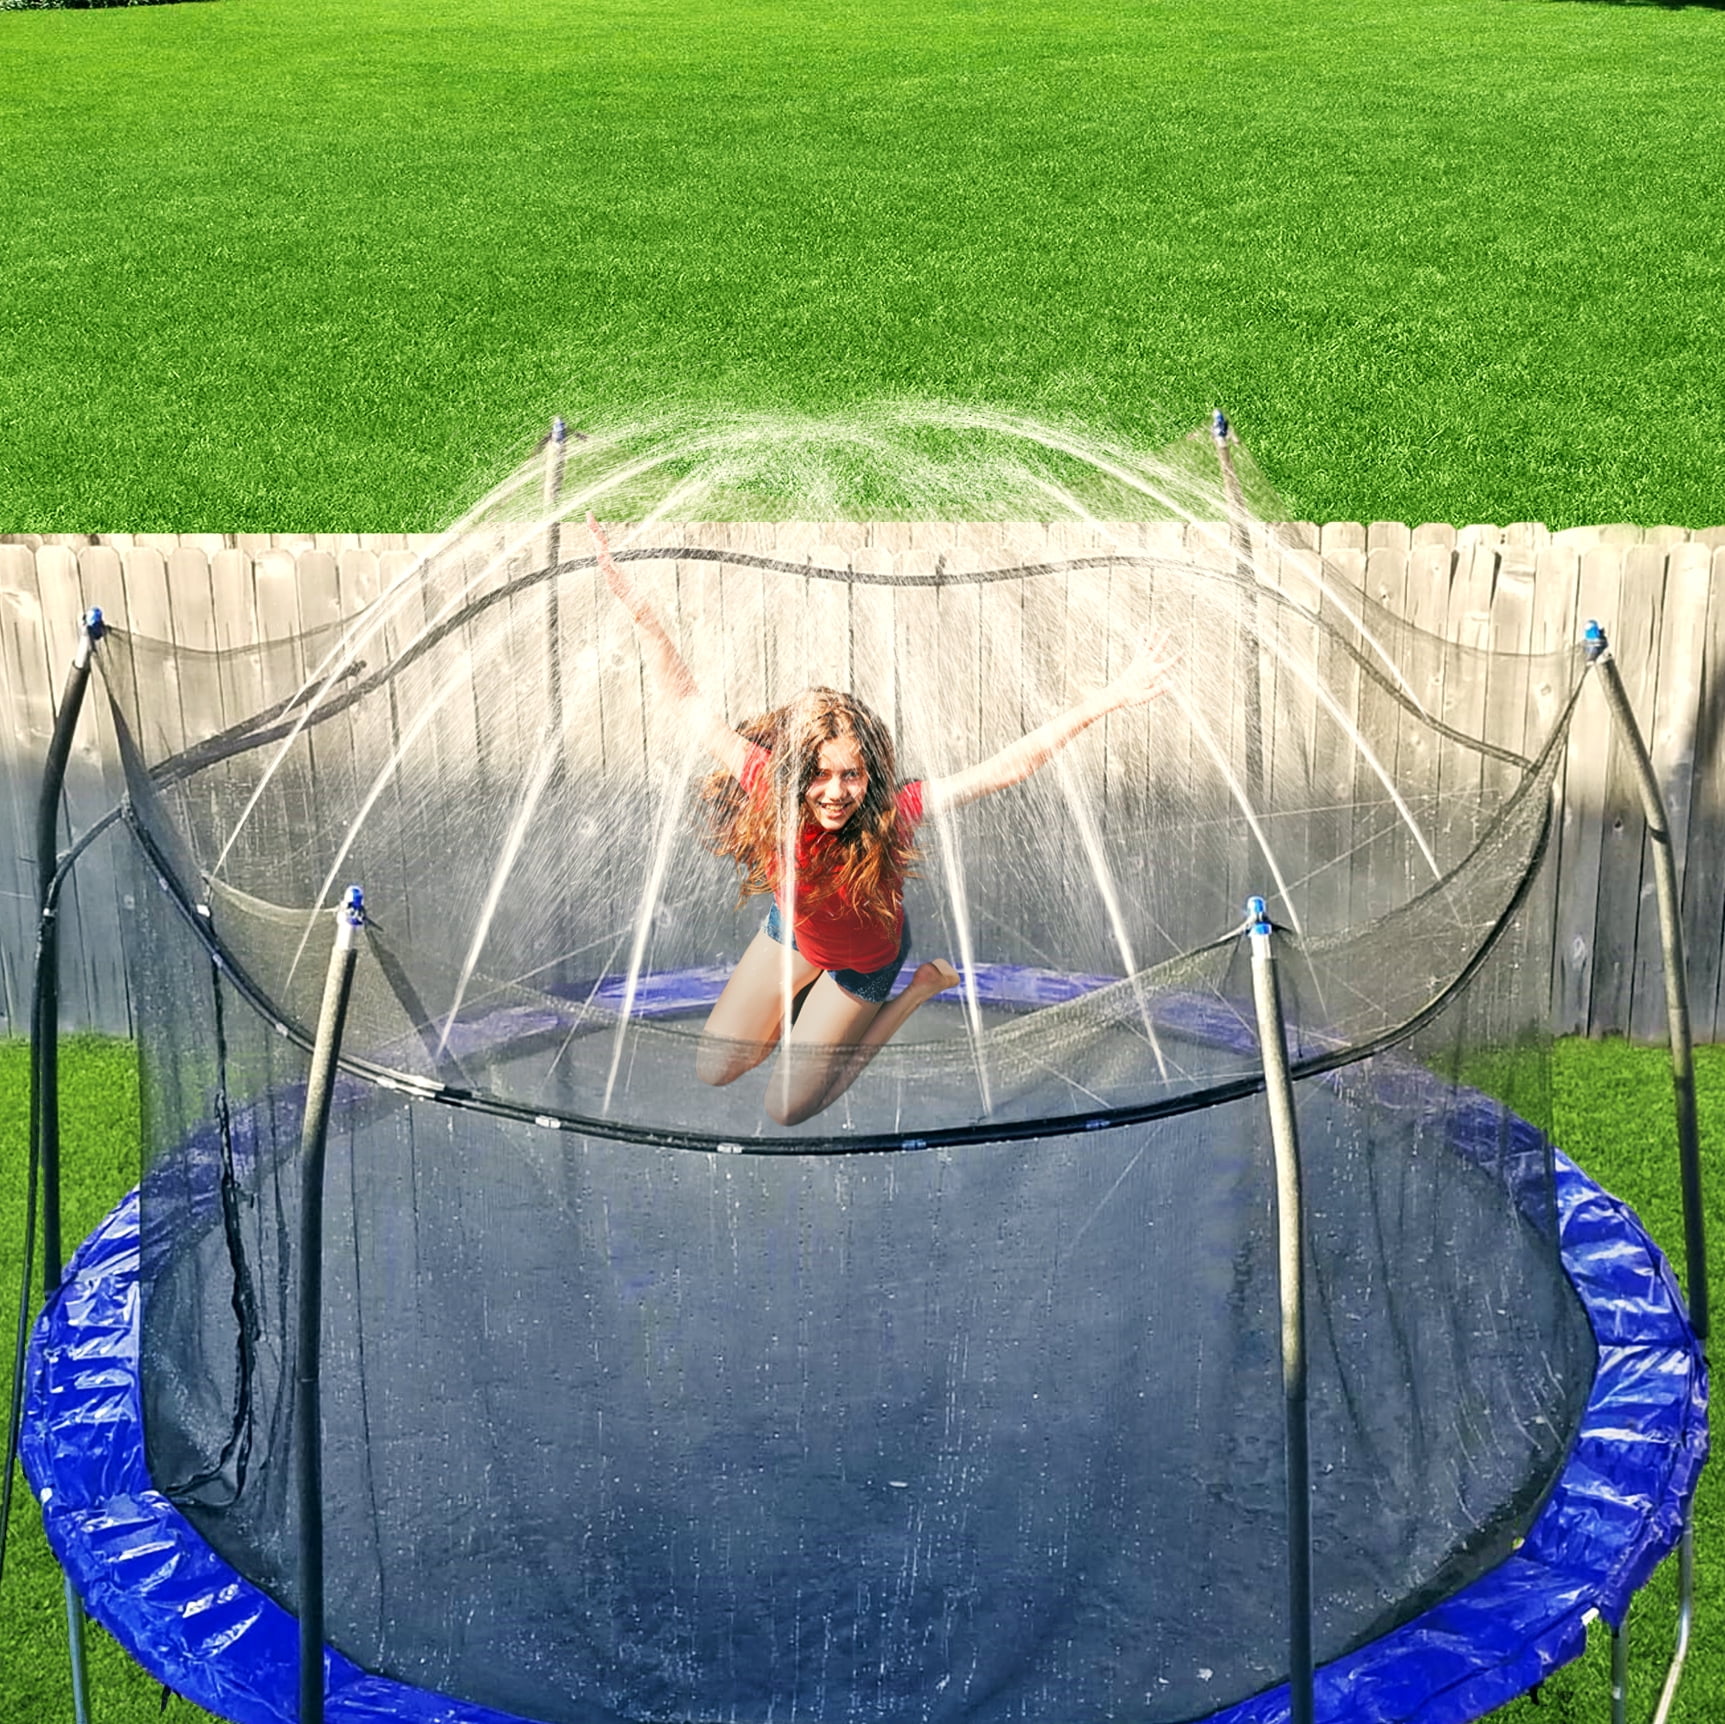 Details about   39ft/49ft Trampoline Sprinkler Kids Summer Outdoor Water Toy Fun Waterpark Spray